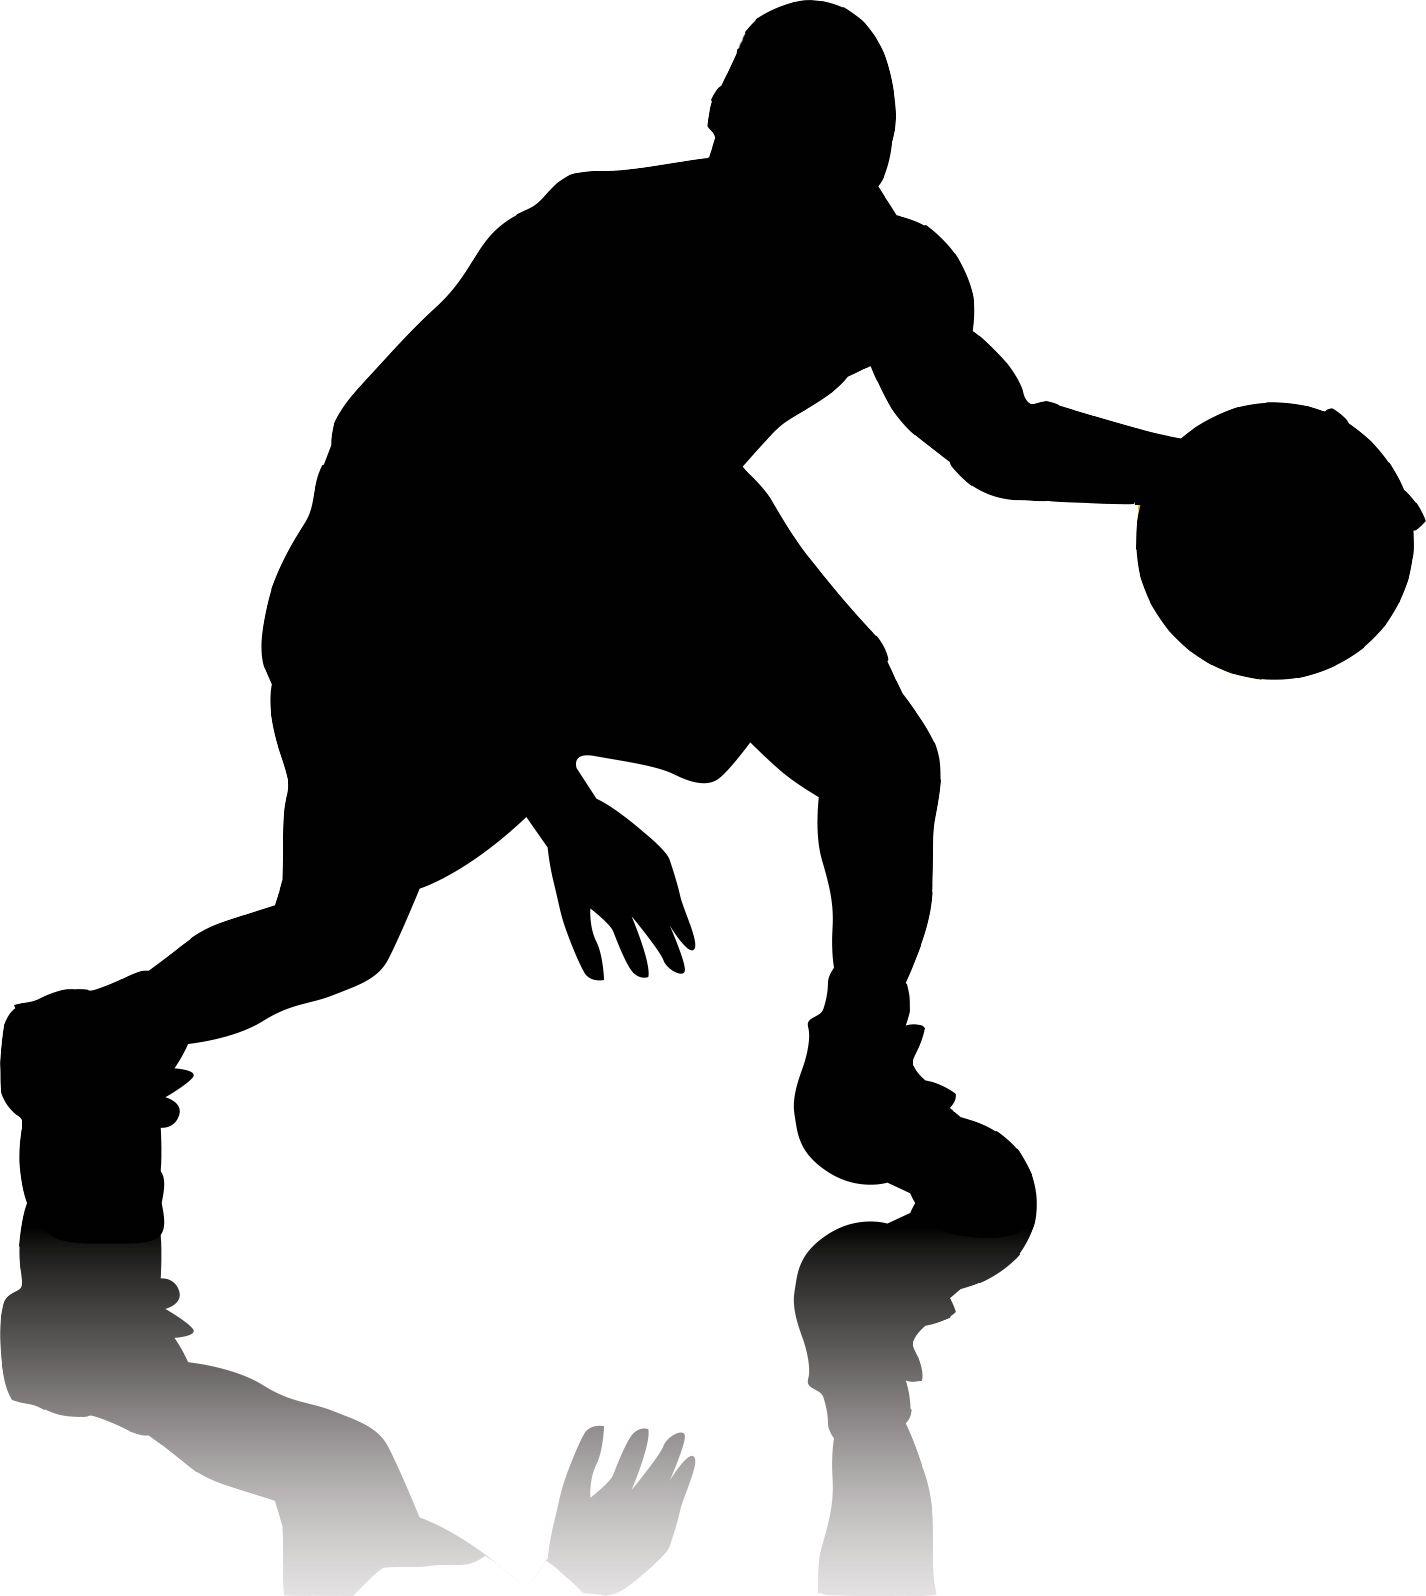 Transparent Basketball Logo - Free Basketball Outline, Download Free Clip Art, Free Clip Art on ...